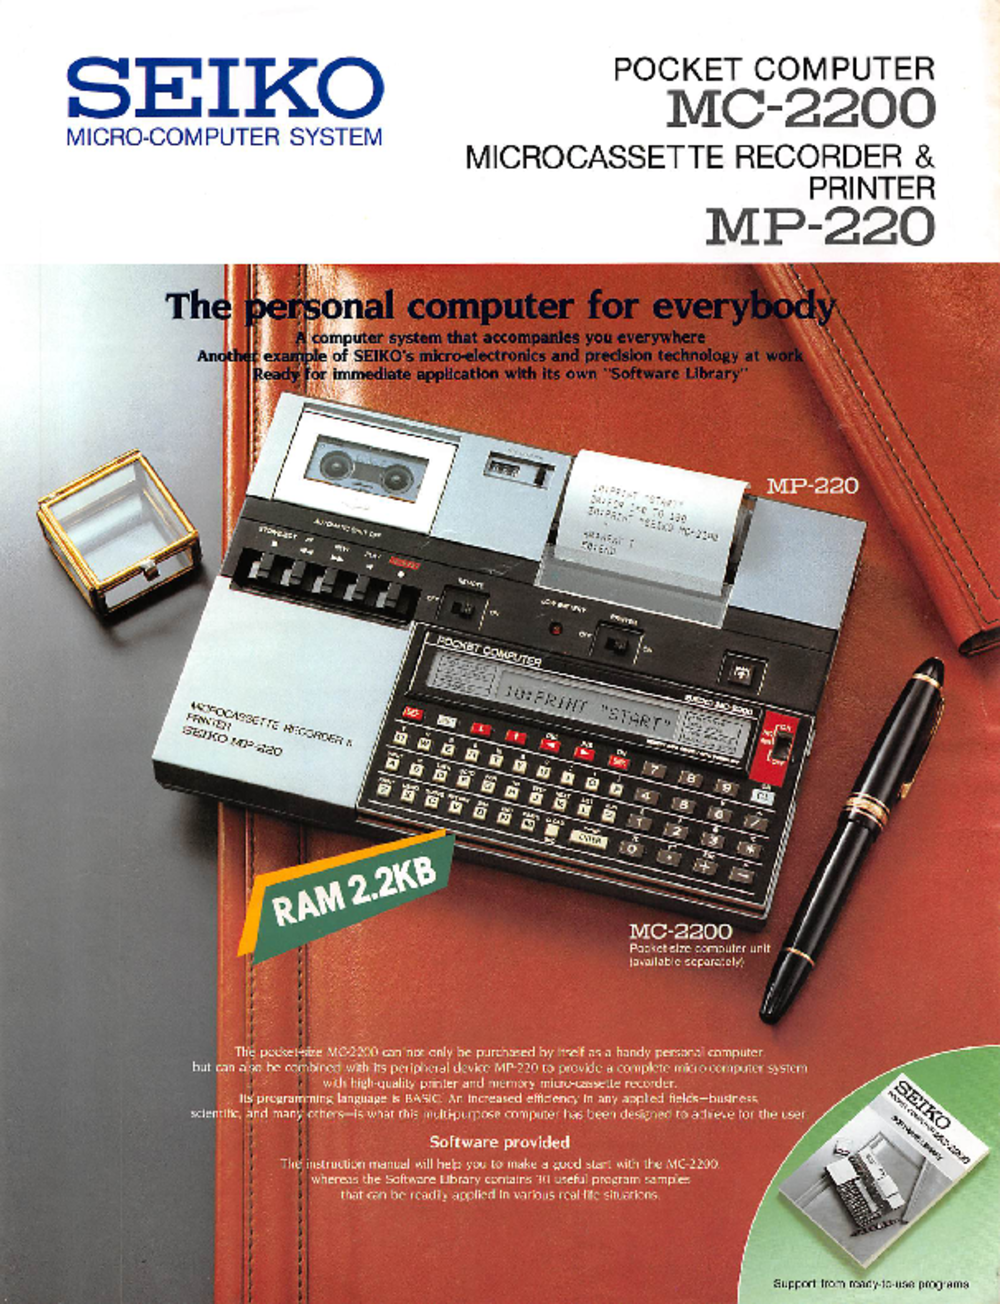 Seiko Pocket Computer MC-2200 Leaflet - Document - Computing History